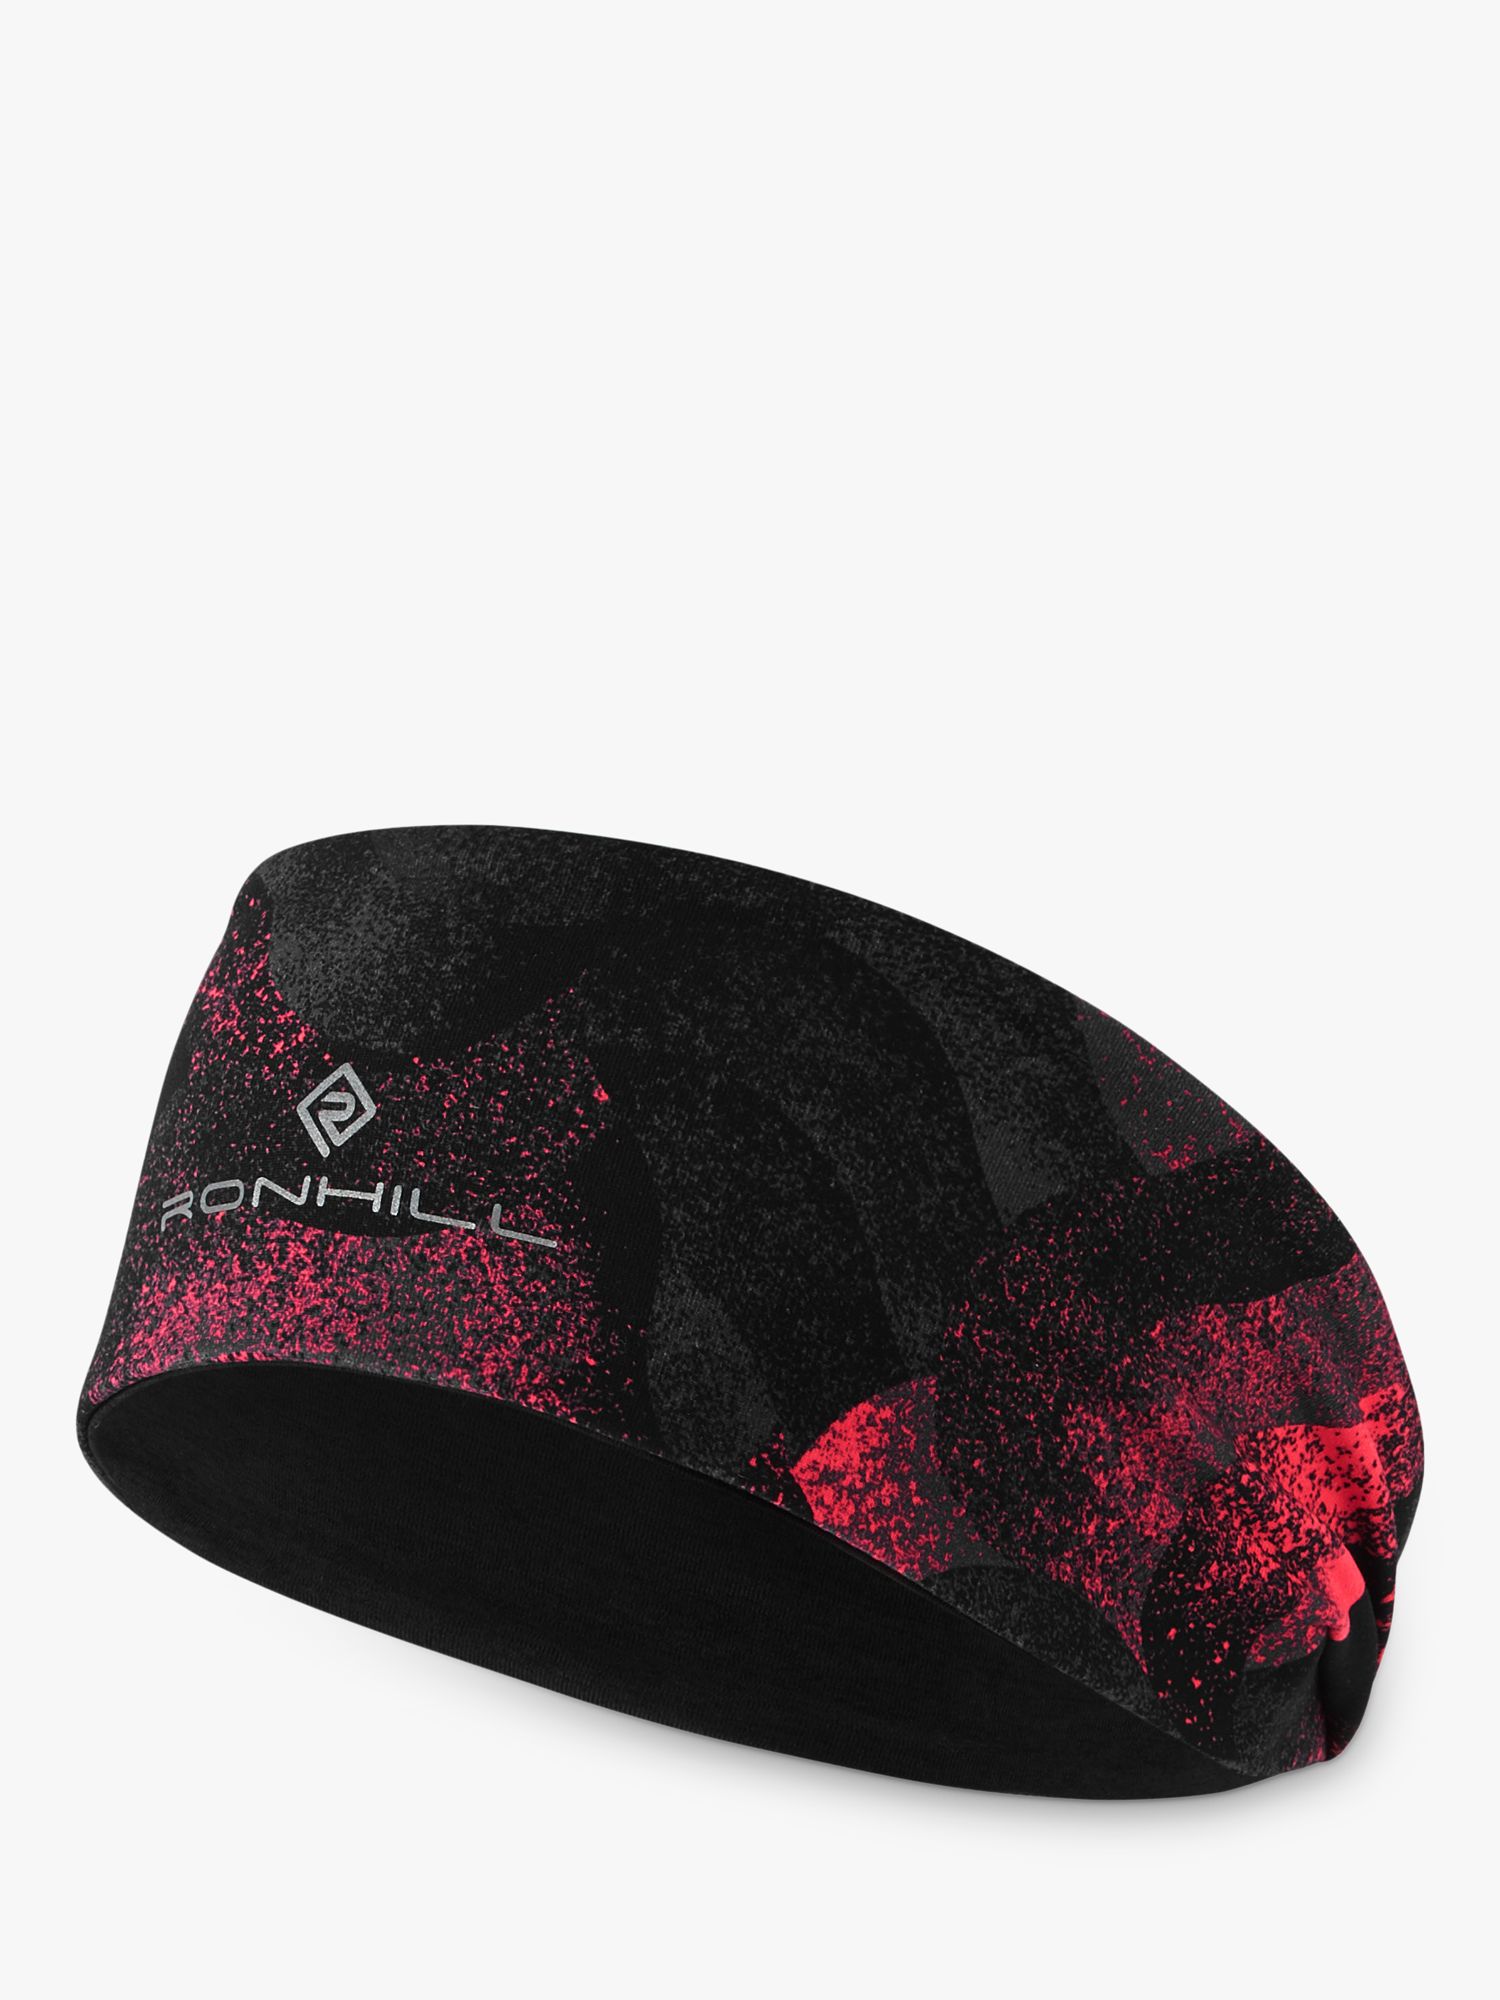 Ronhill Contour Reversible Headband, Hot Wave Pink at John Lewis & Partners